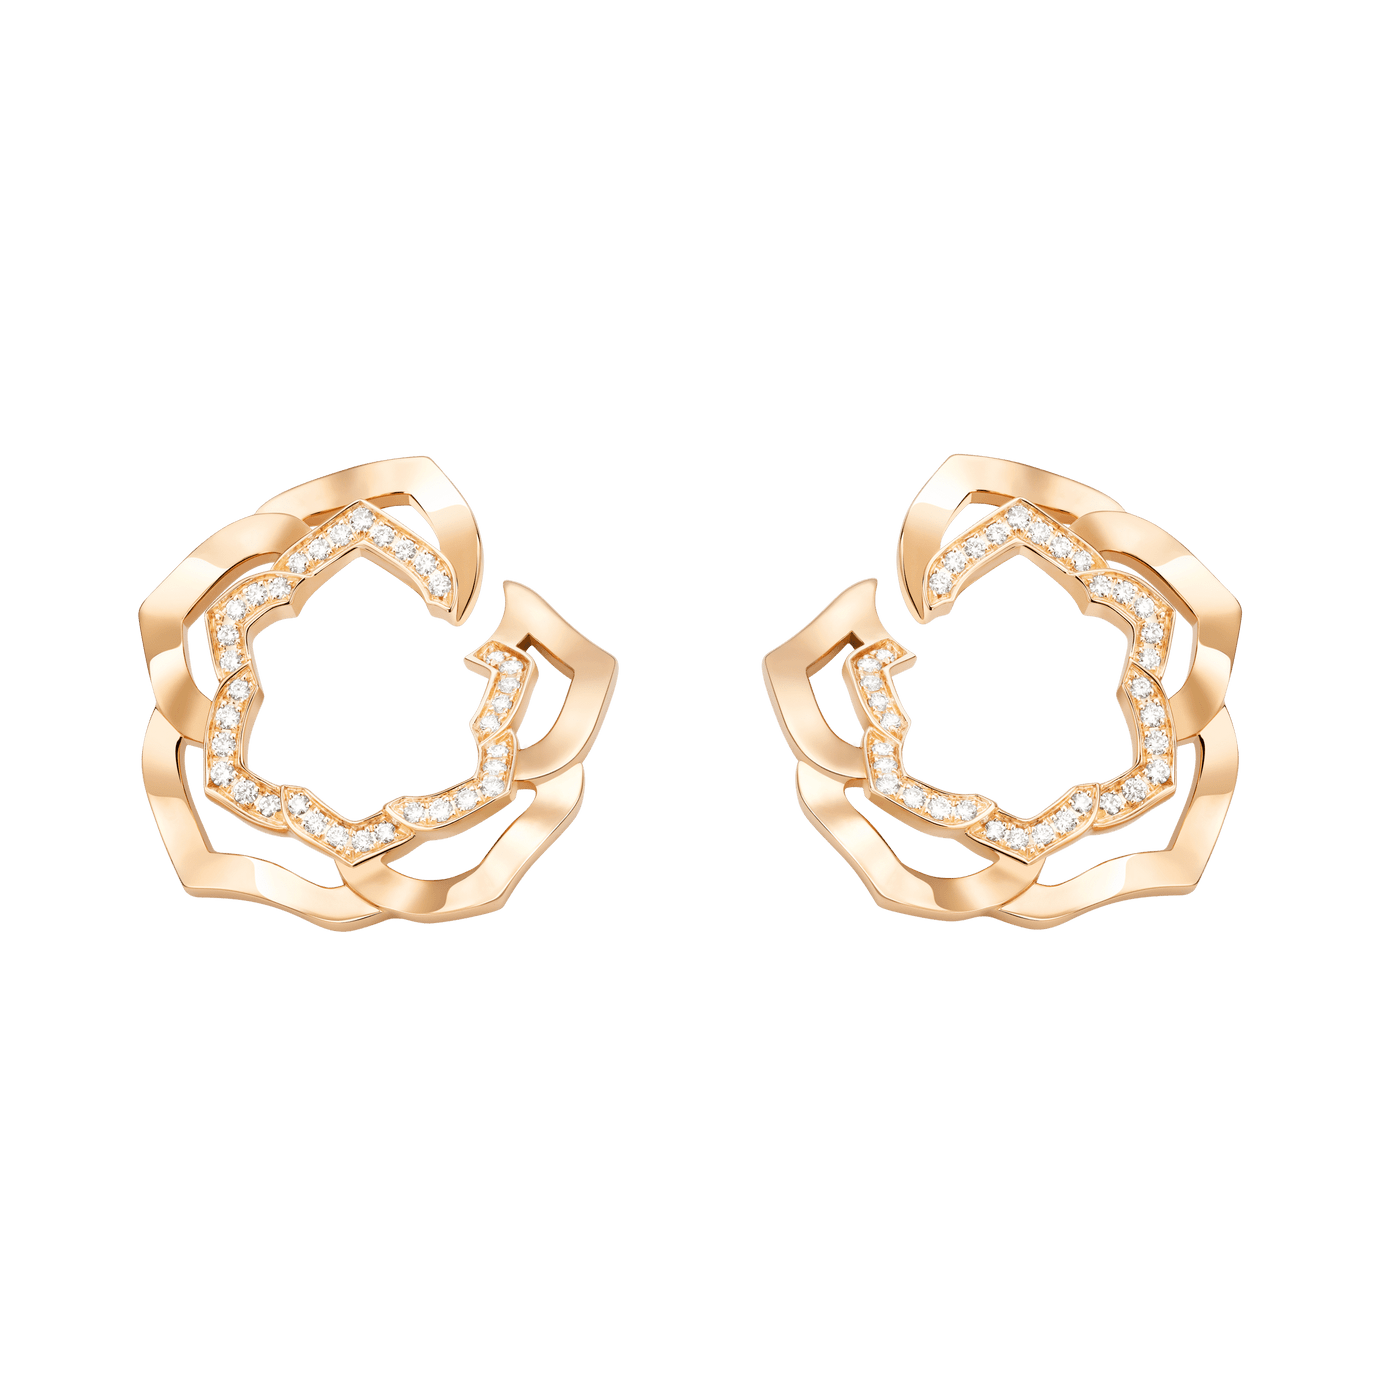 PIAGET Necklace Rose Flower Motif 1 Point Diamond 750(18K) White Gold | eBay